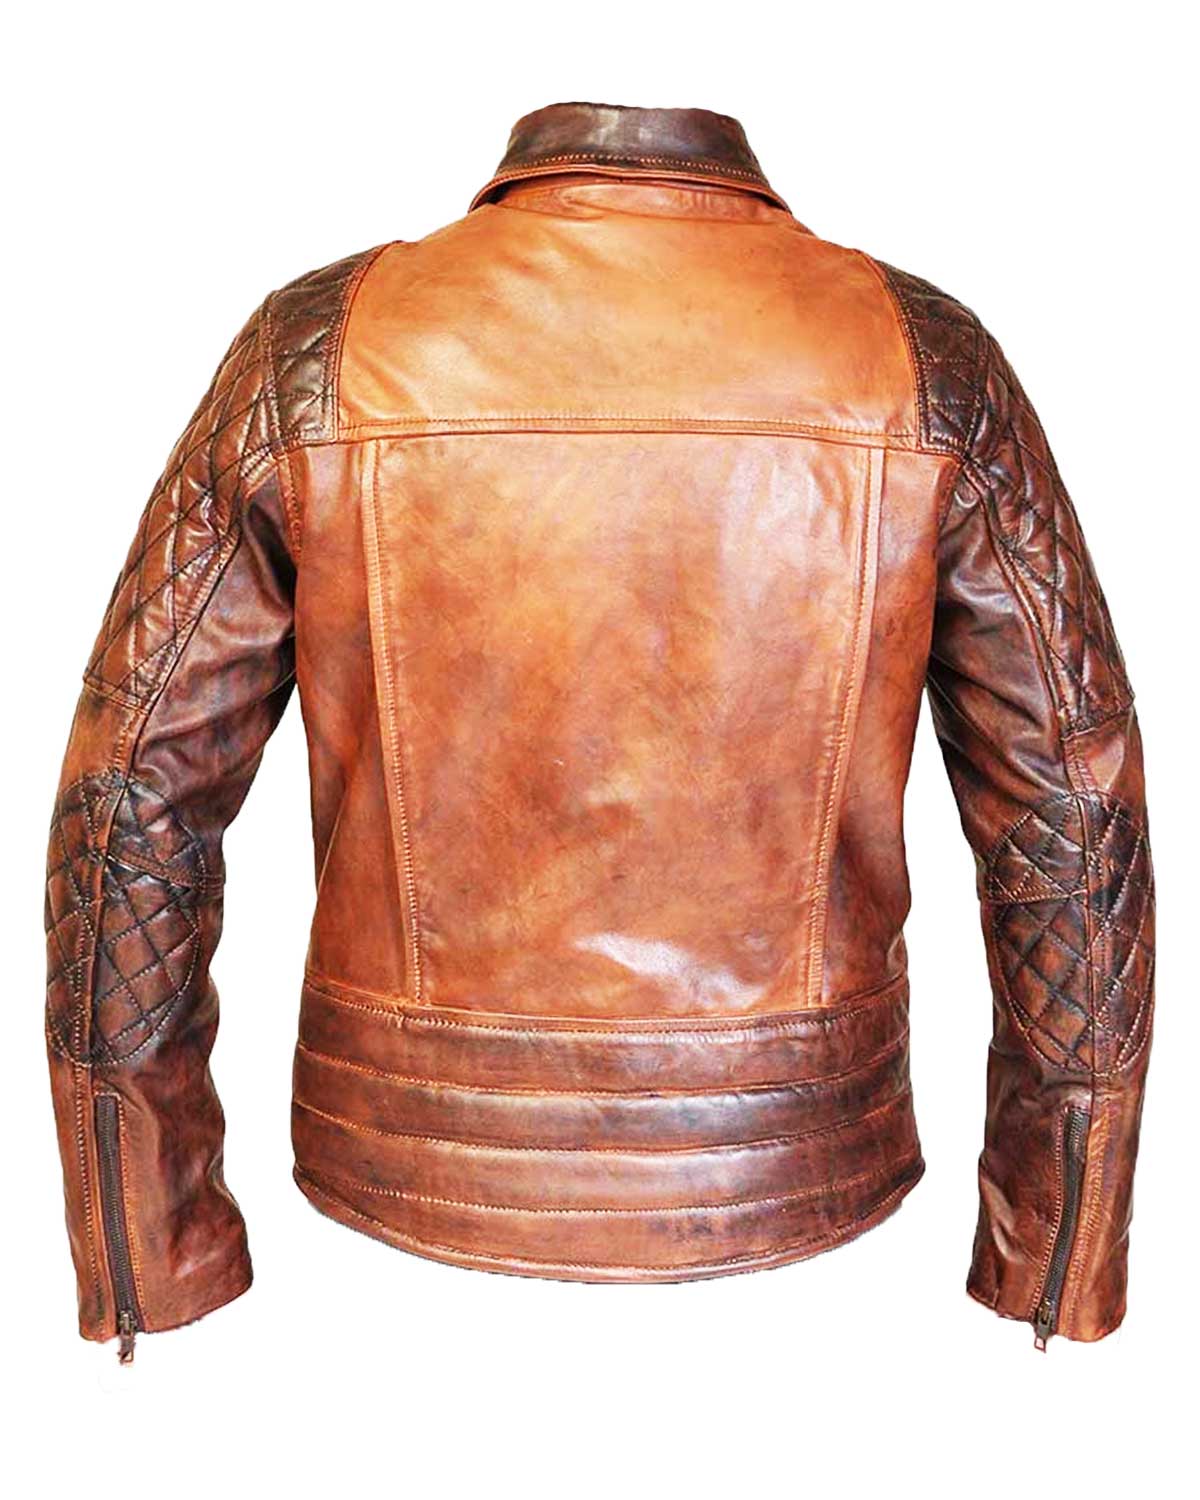 Men’s Biker Vintage Rustic Quilted Brown Leather Jacket